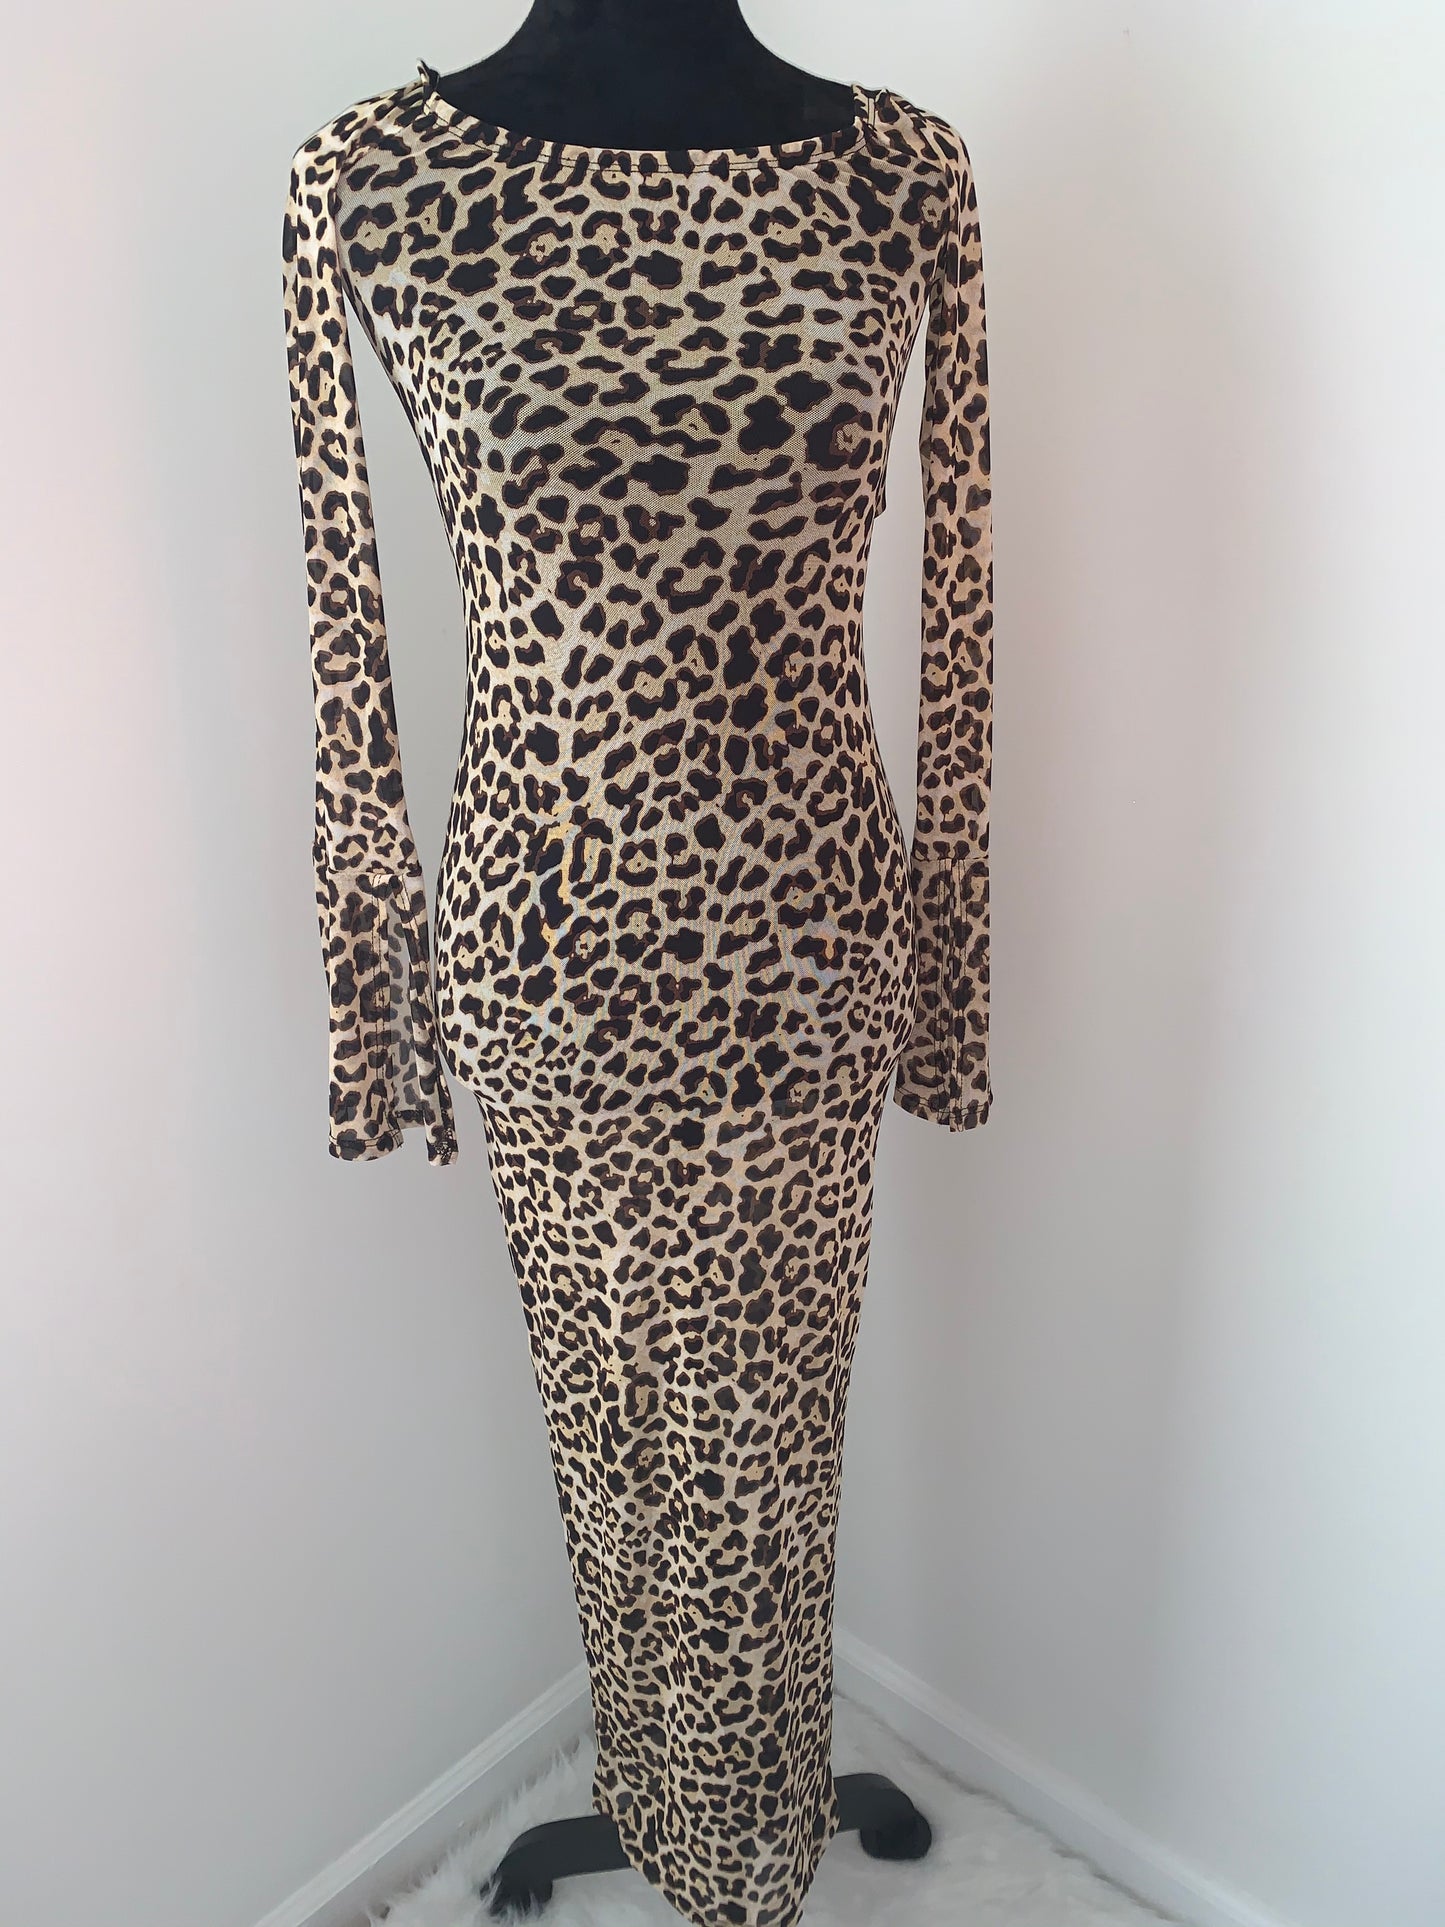 Punta Cana Leopard Dress